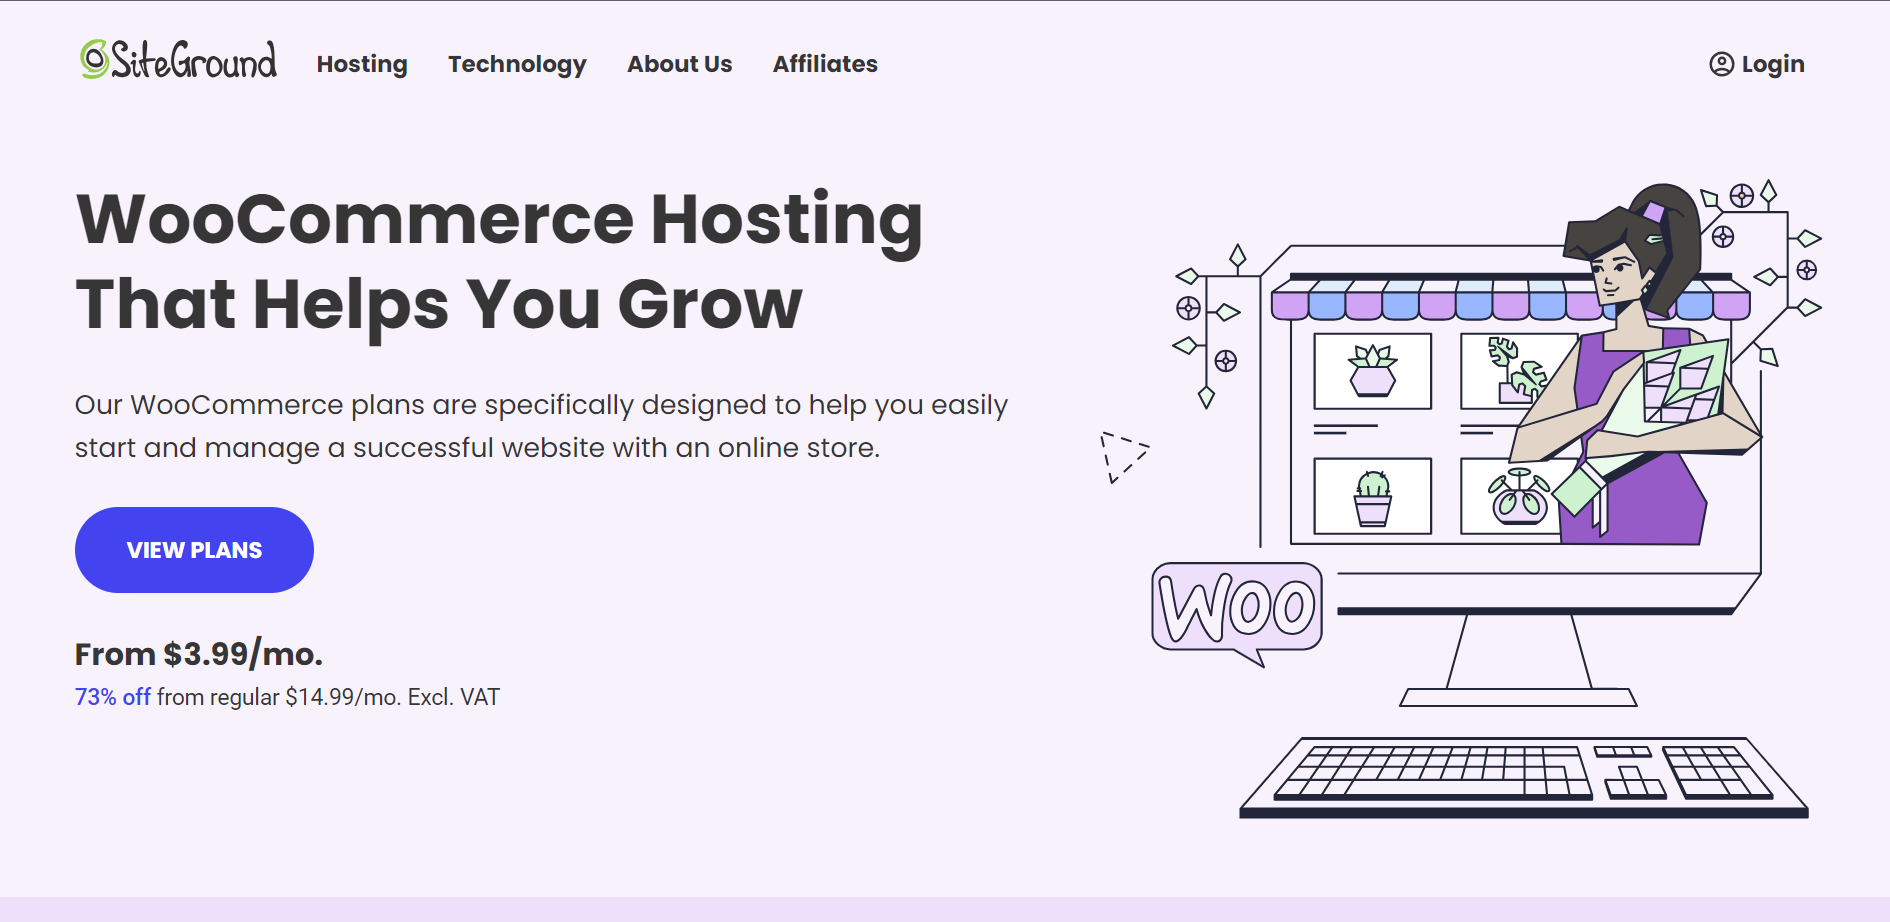 site groung web hosting